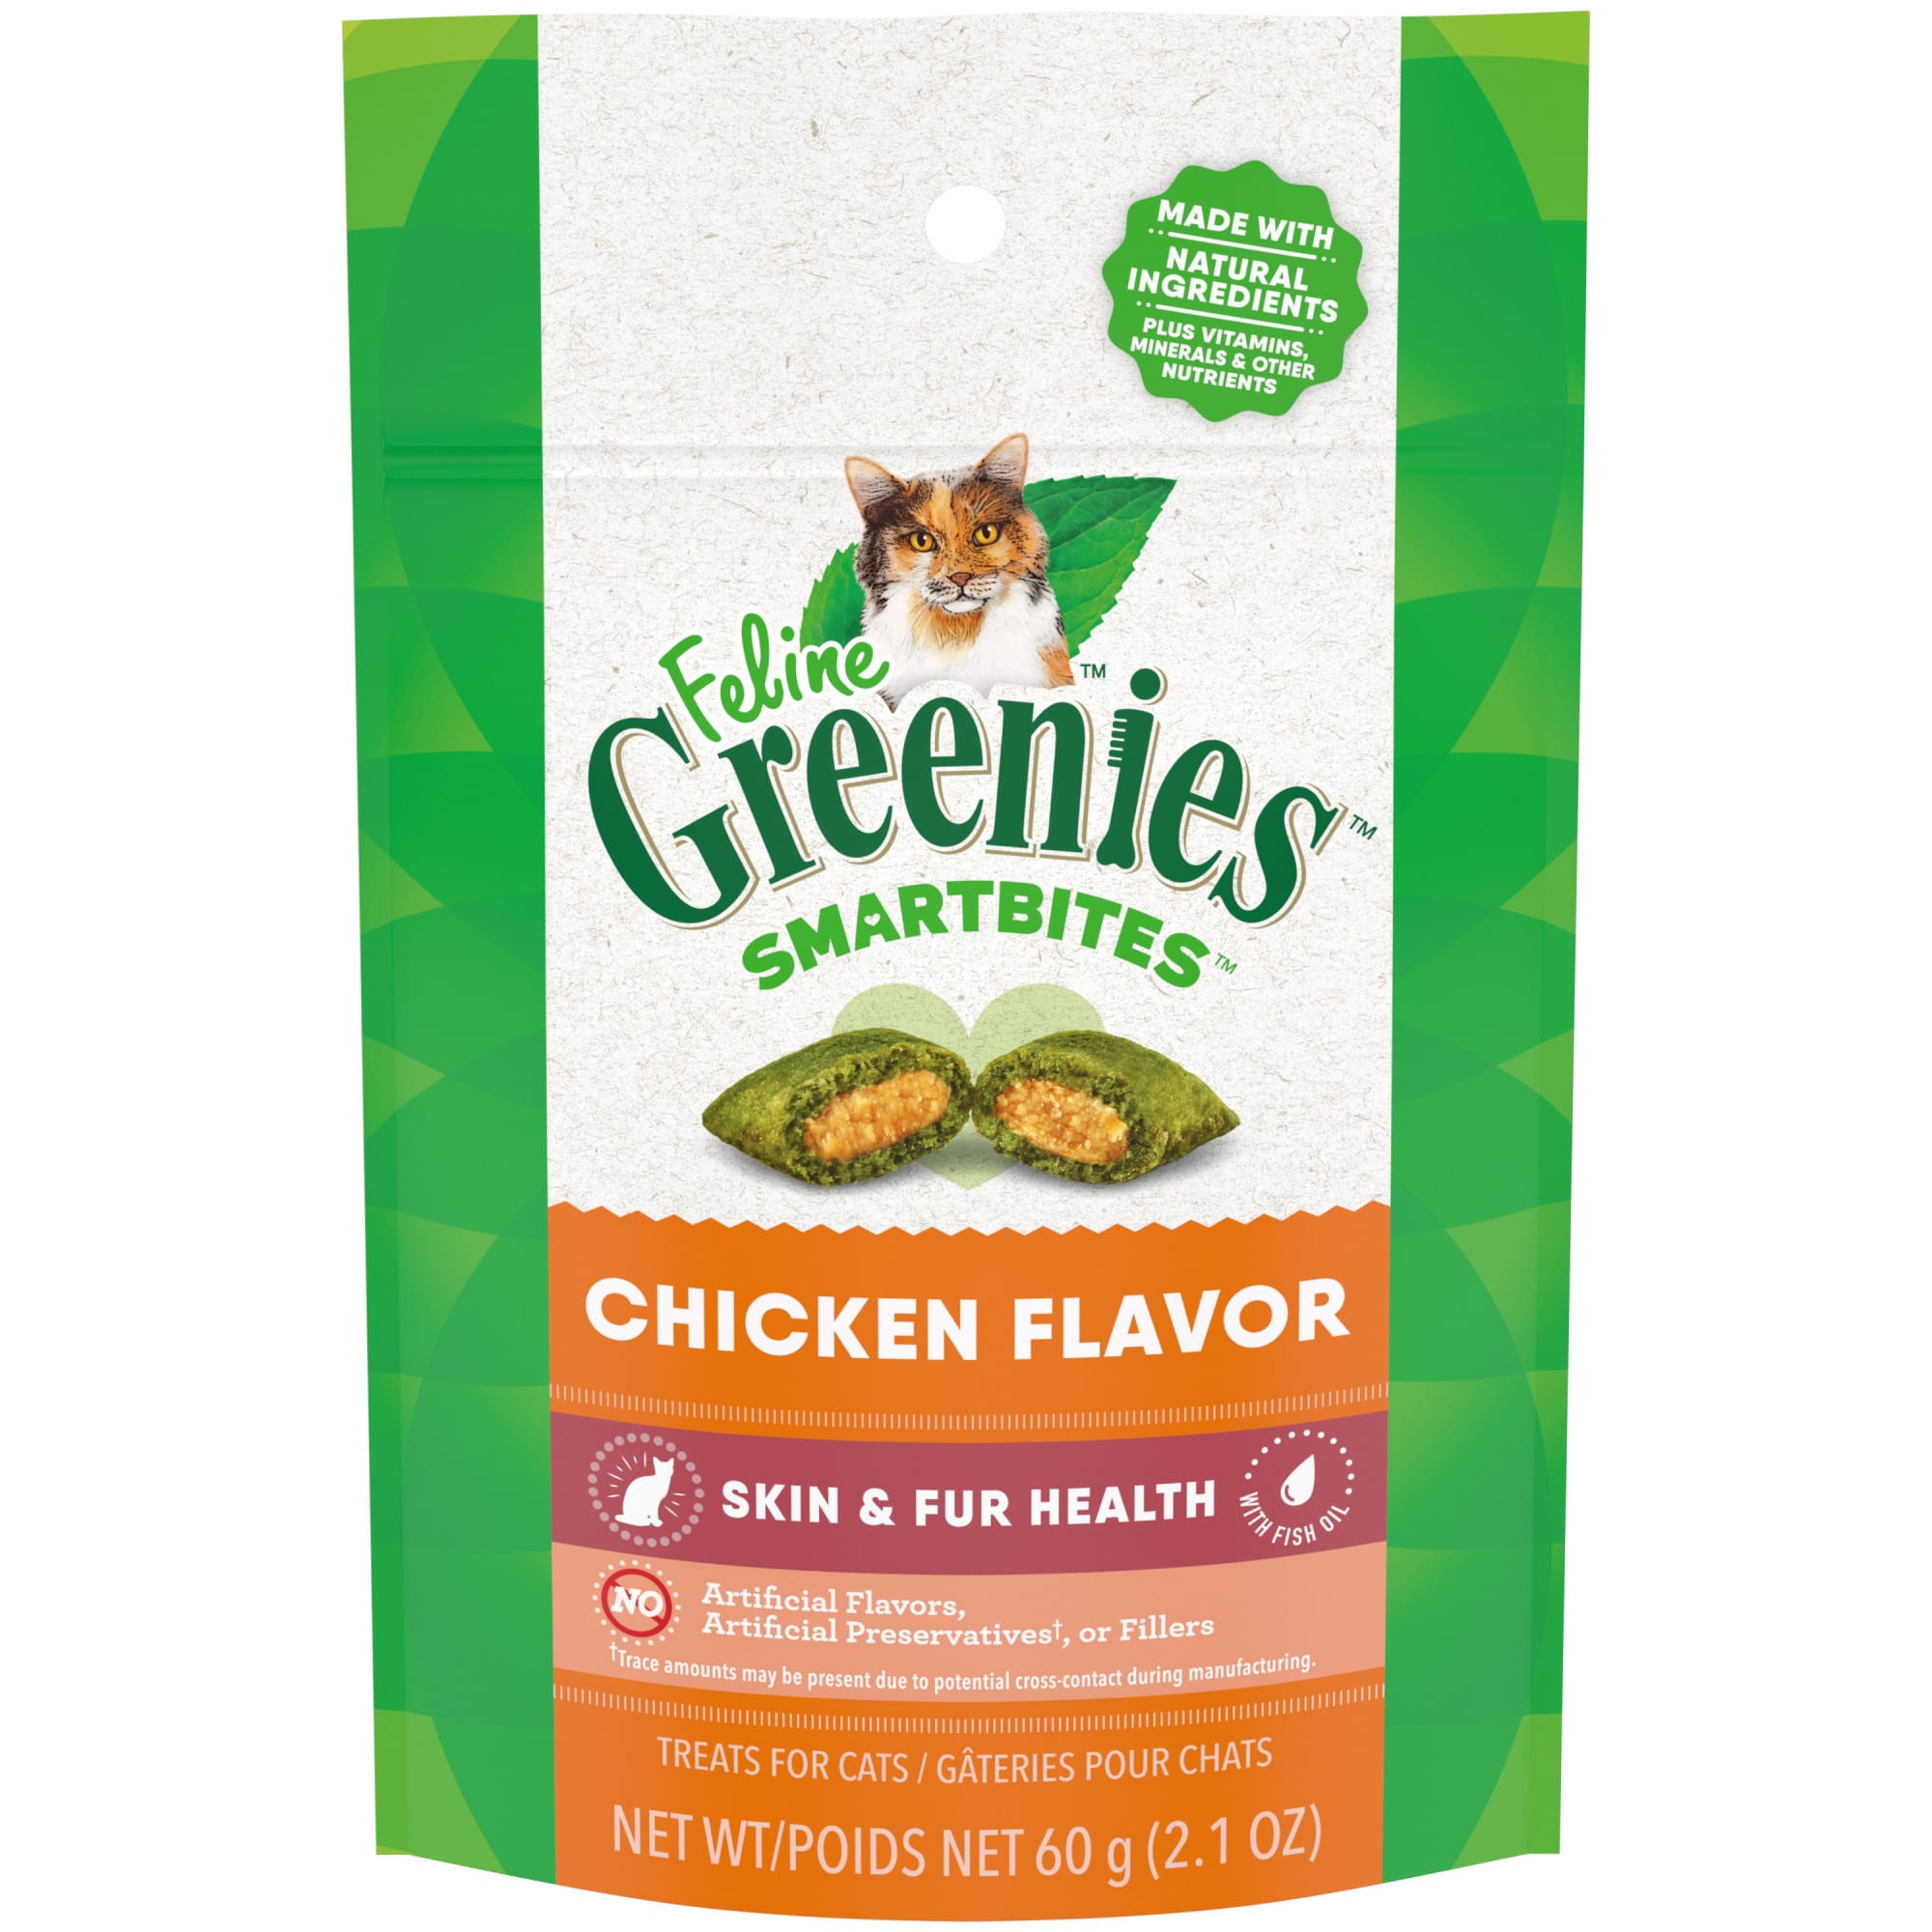 Photos - Cat Food Greenies Smartbites Chicken Flavor Skin & Fur Health Crunchy and 